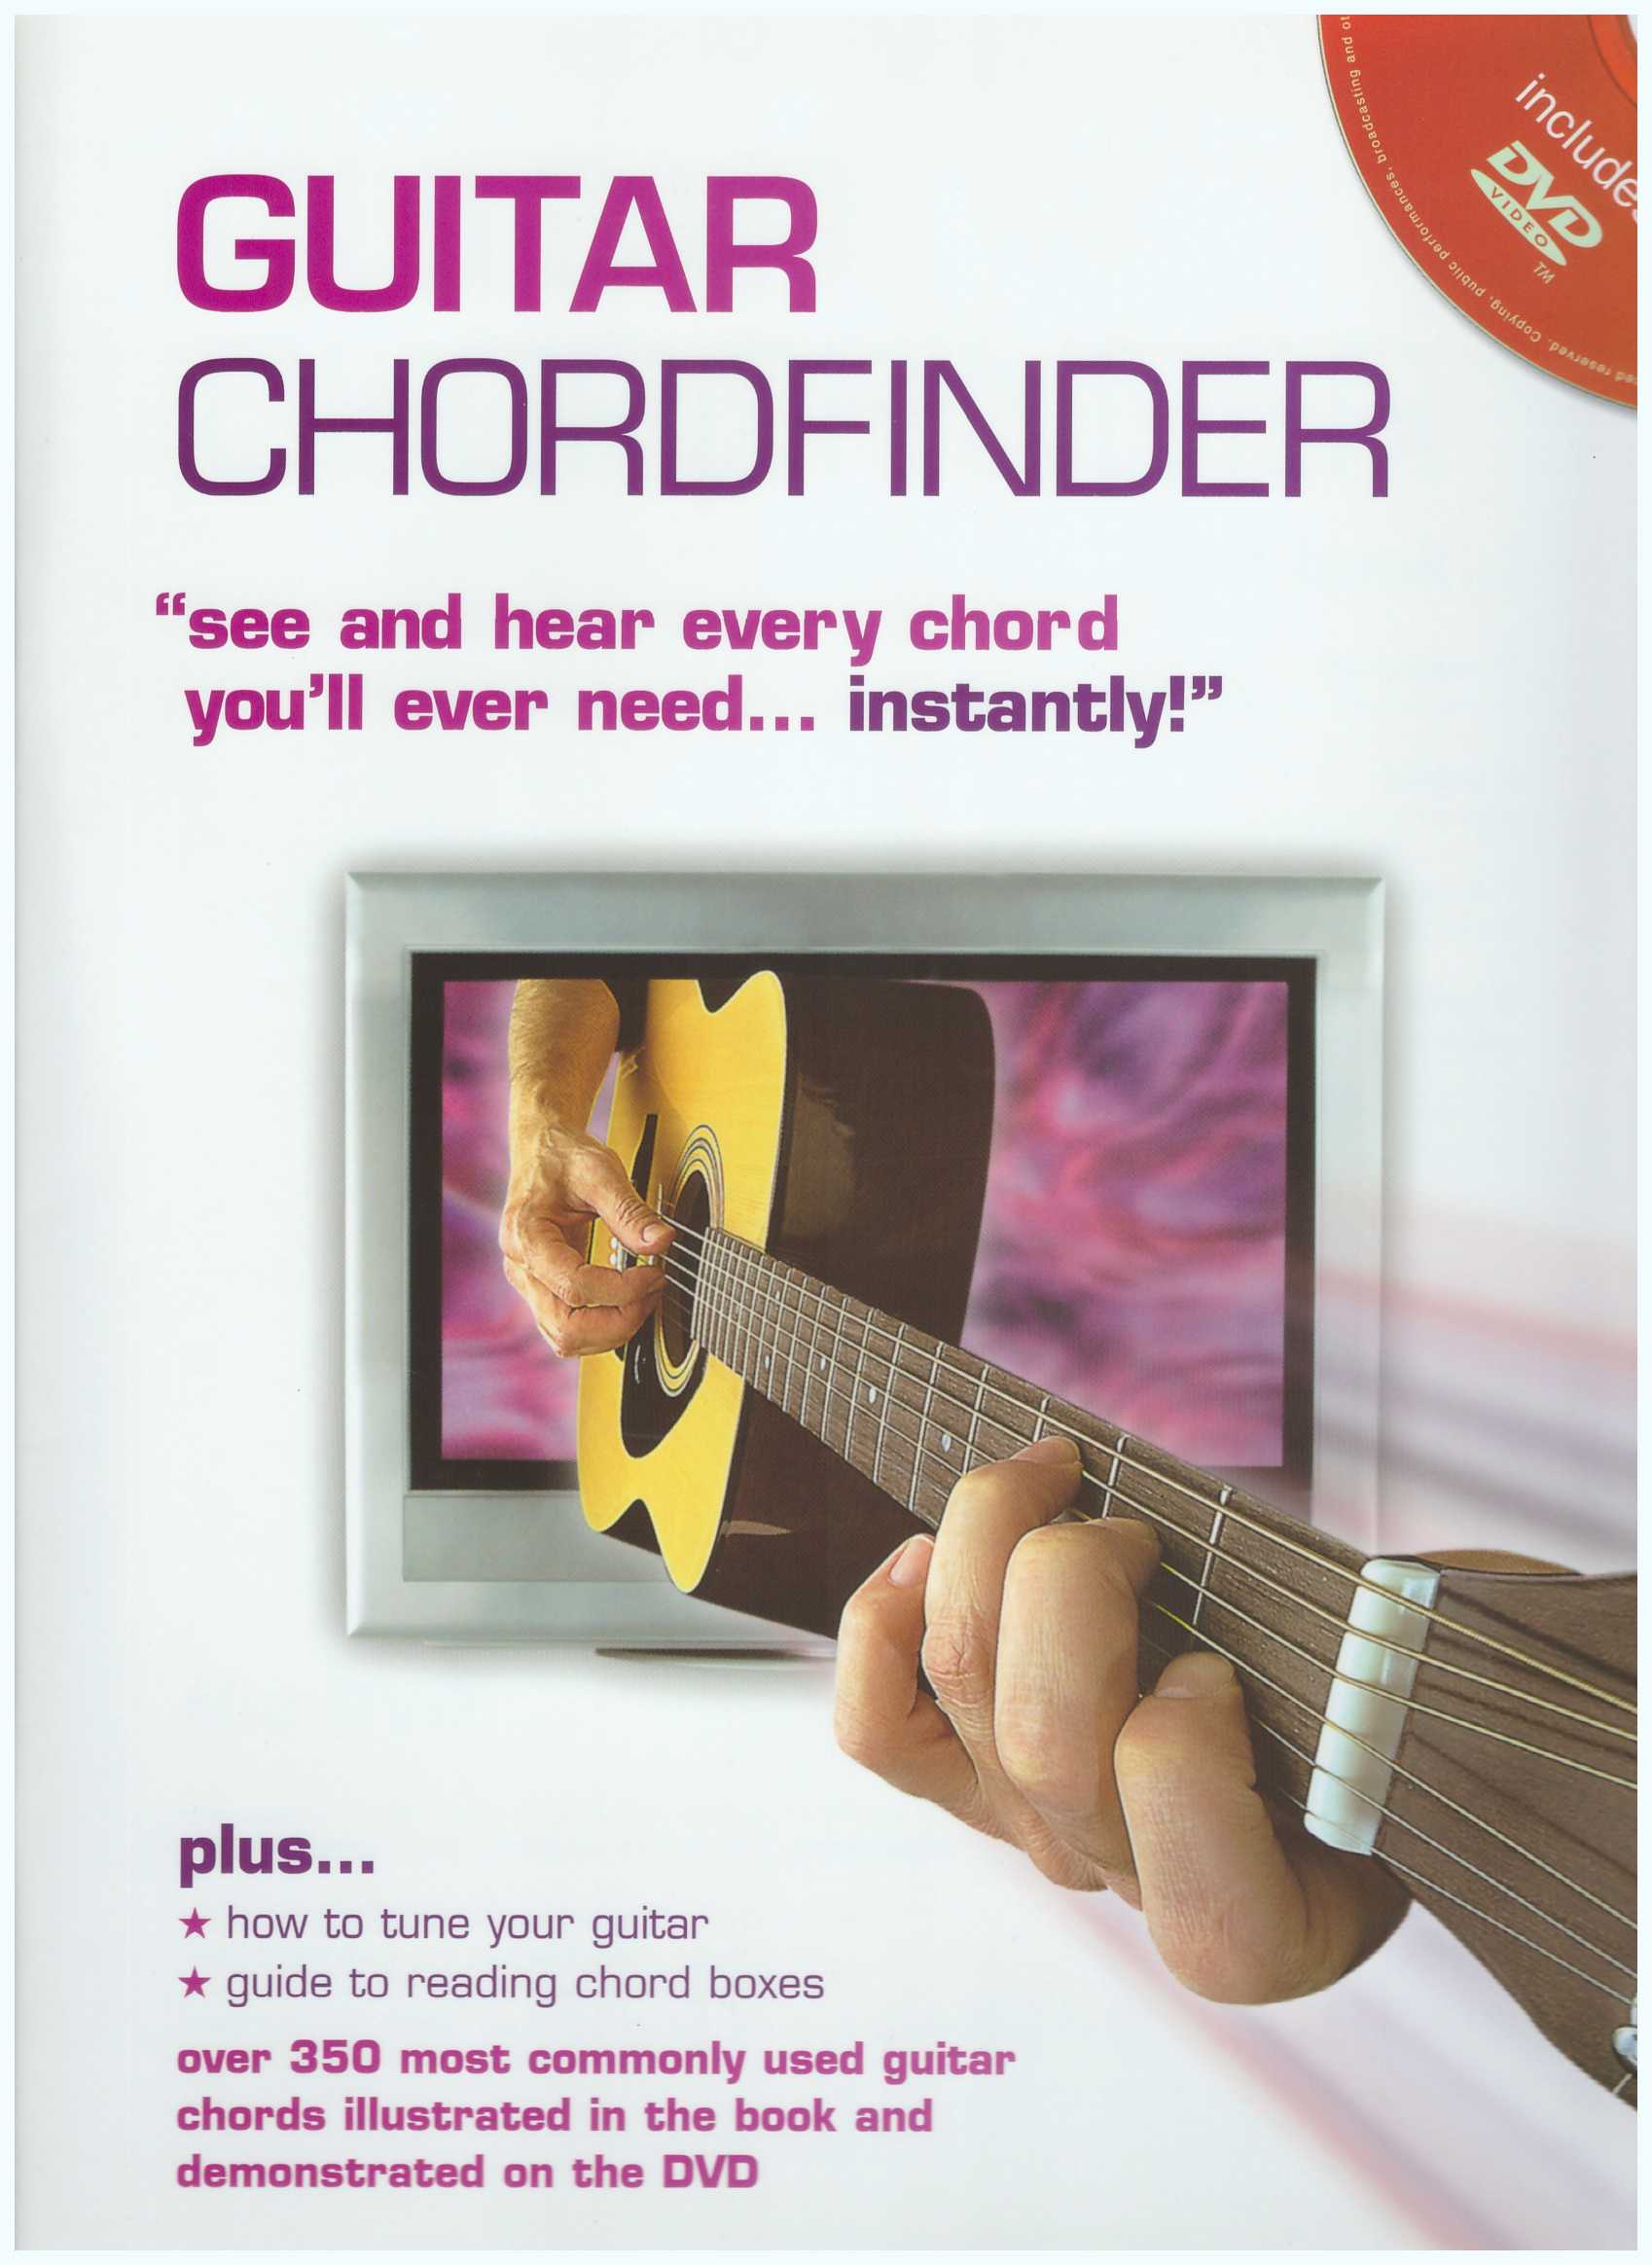 Guitar Chordfinder / Guitar Book / Gitar Book / Music Book / Gitar Chord Book